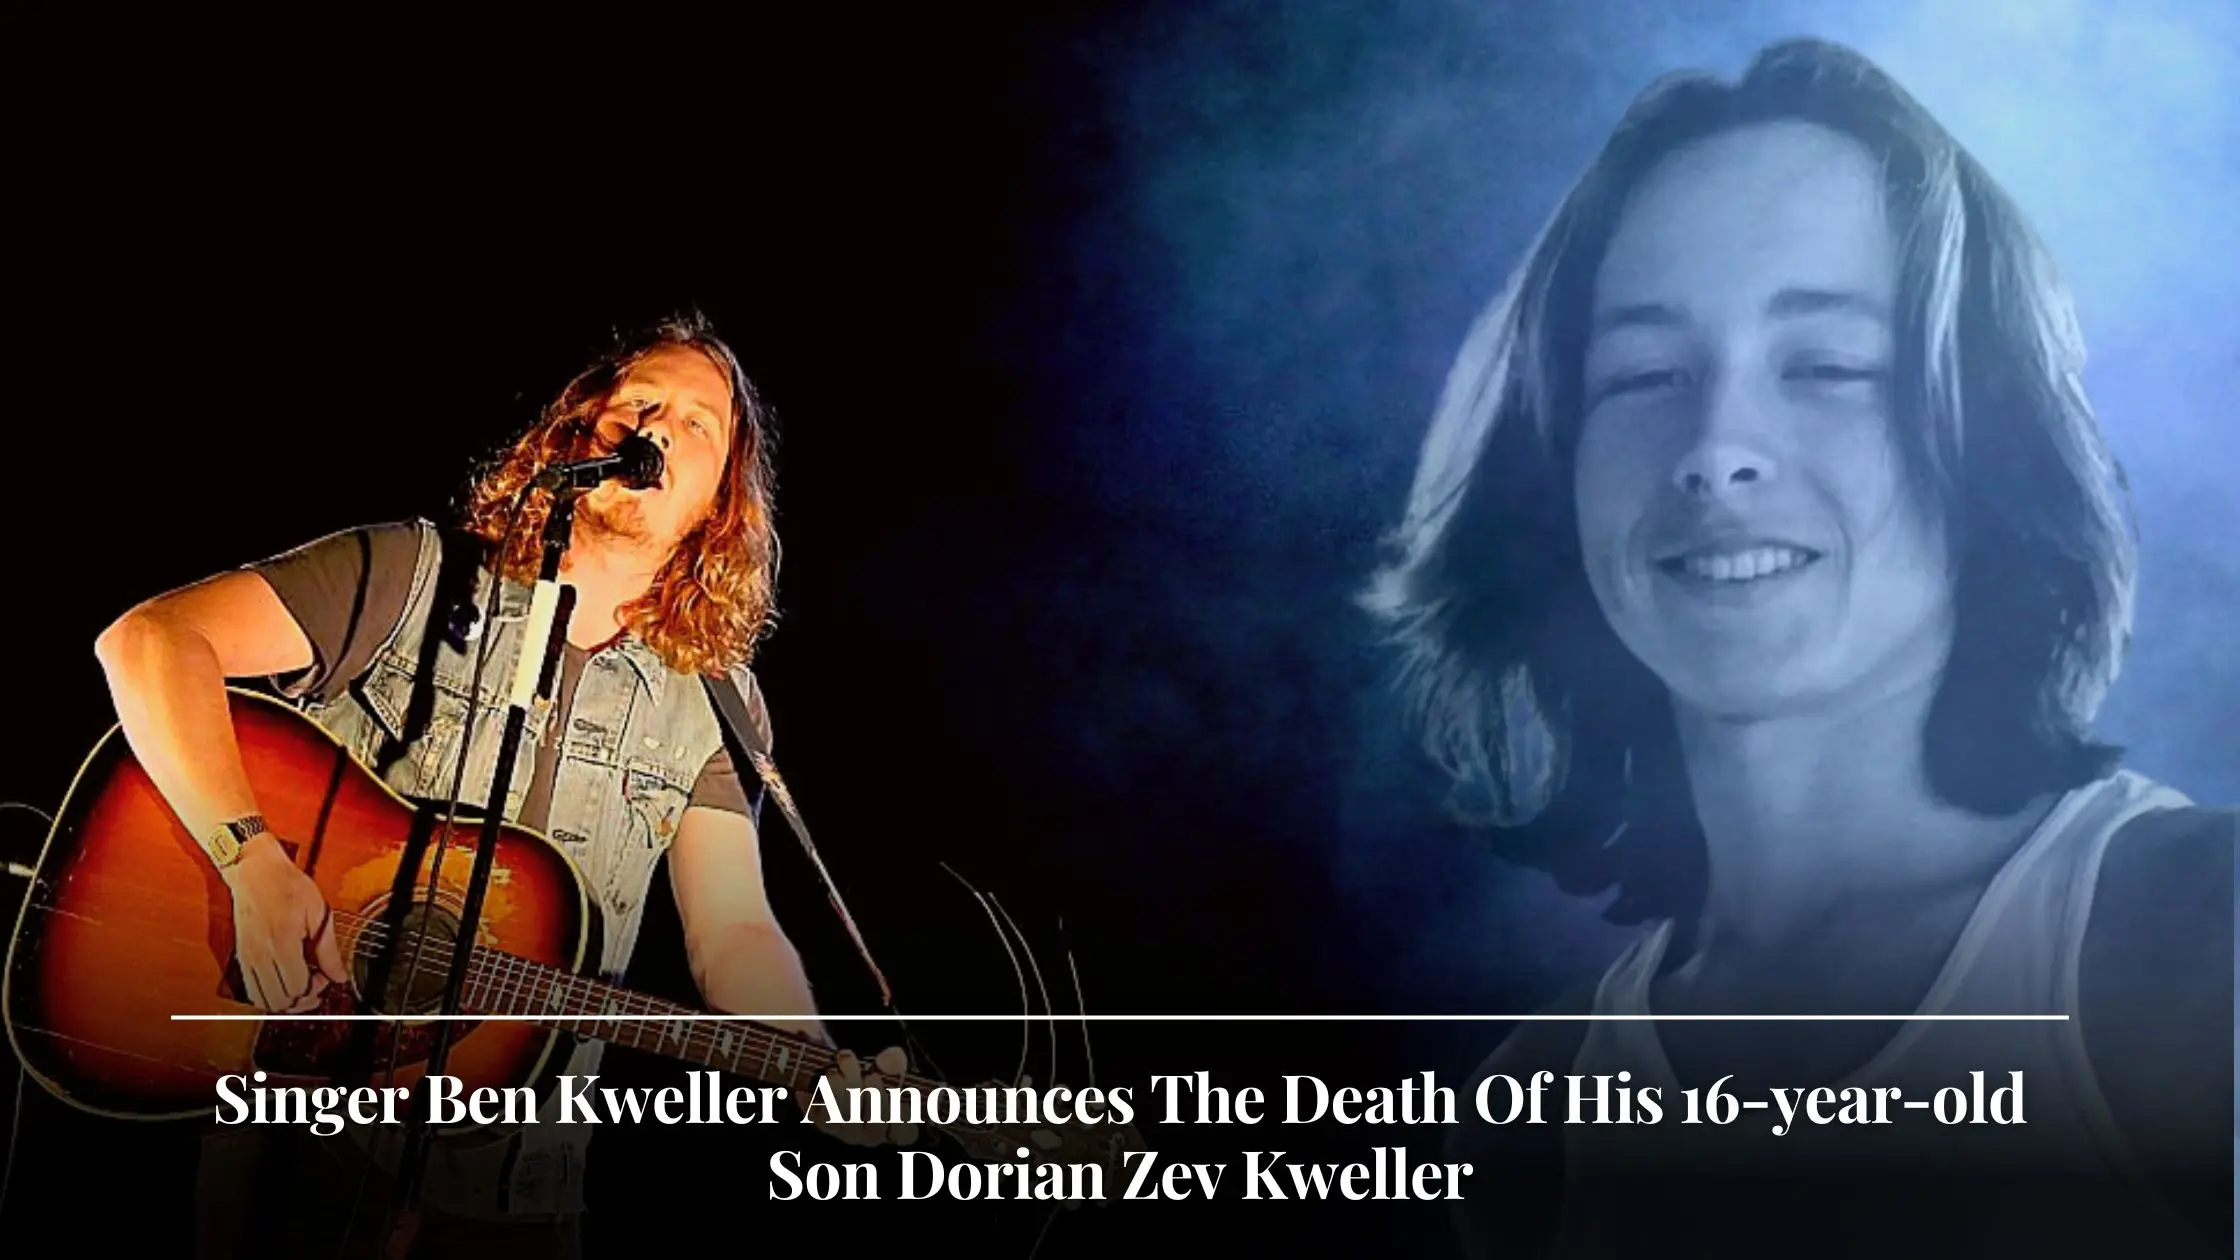 Singer Ben Kweller Announces The Death Of His 16-year-old Son Dorian Zev Kweller